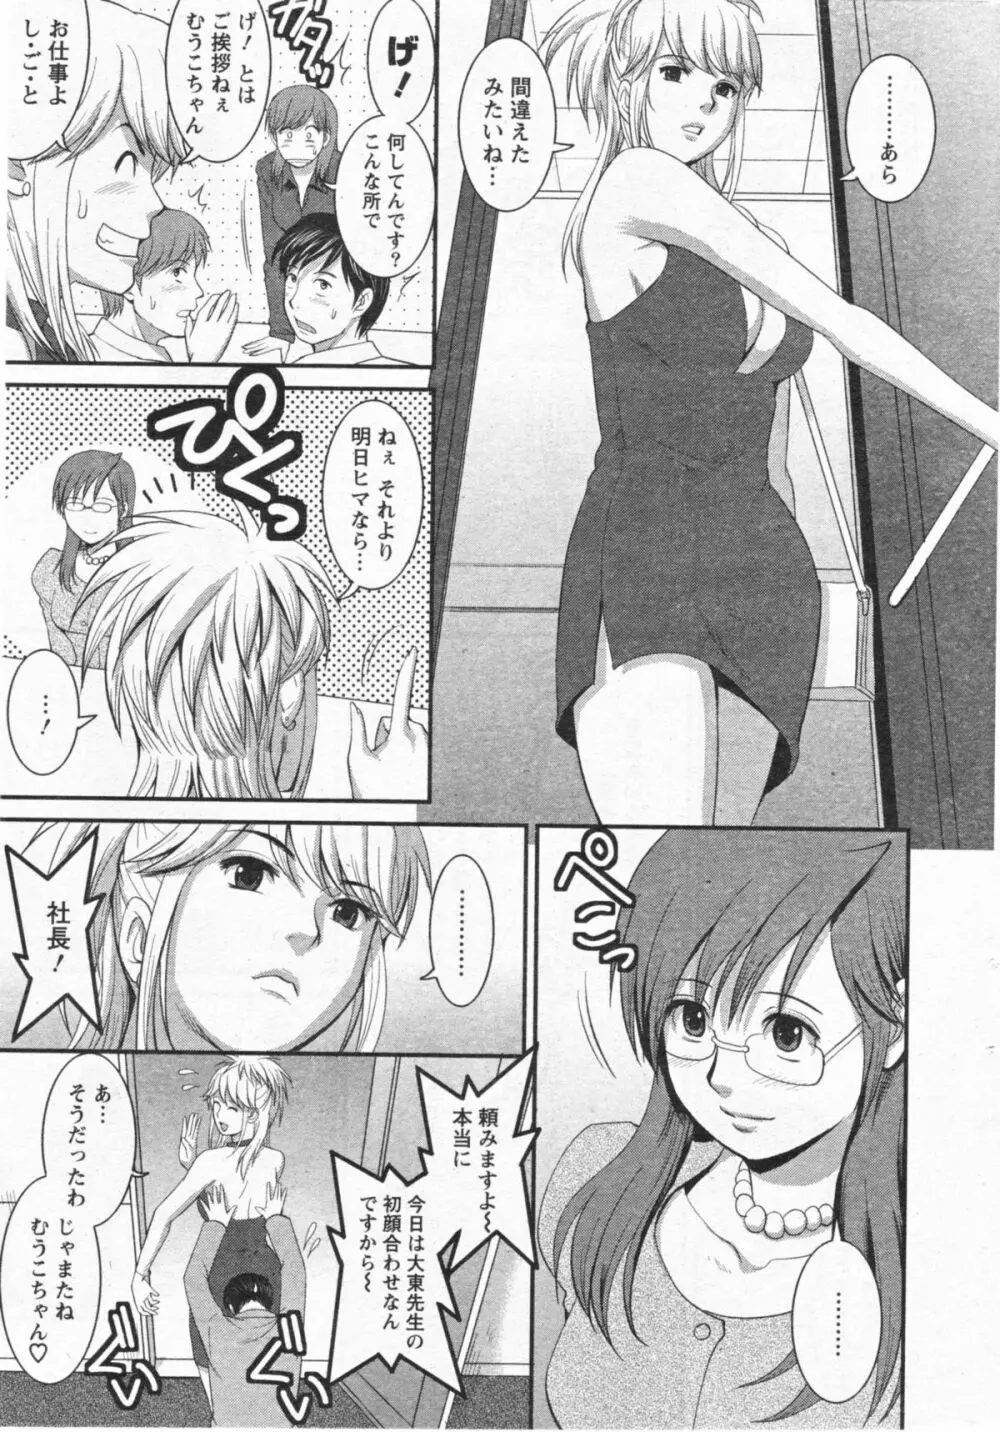 Haken no Muuko San 11 10ページ